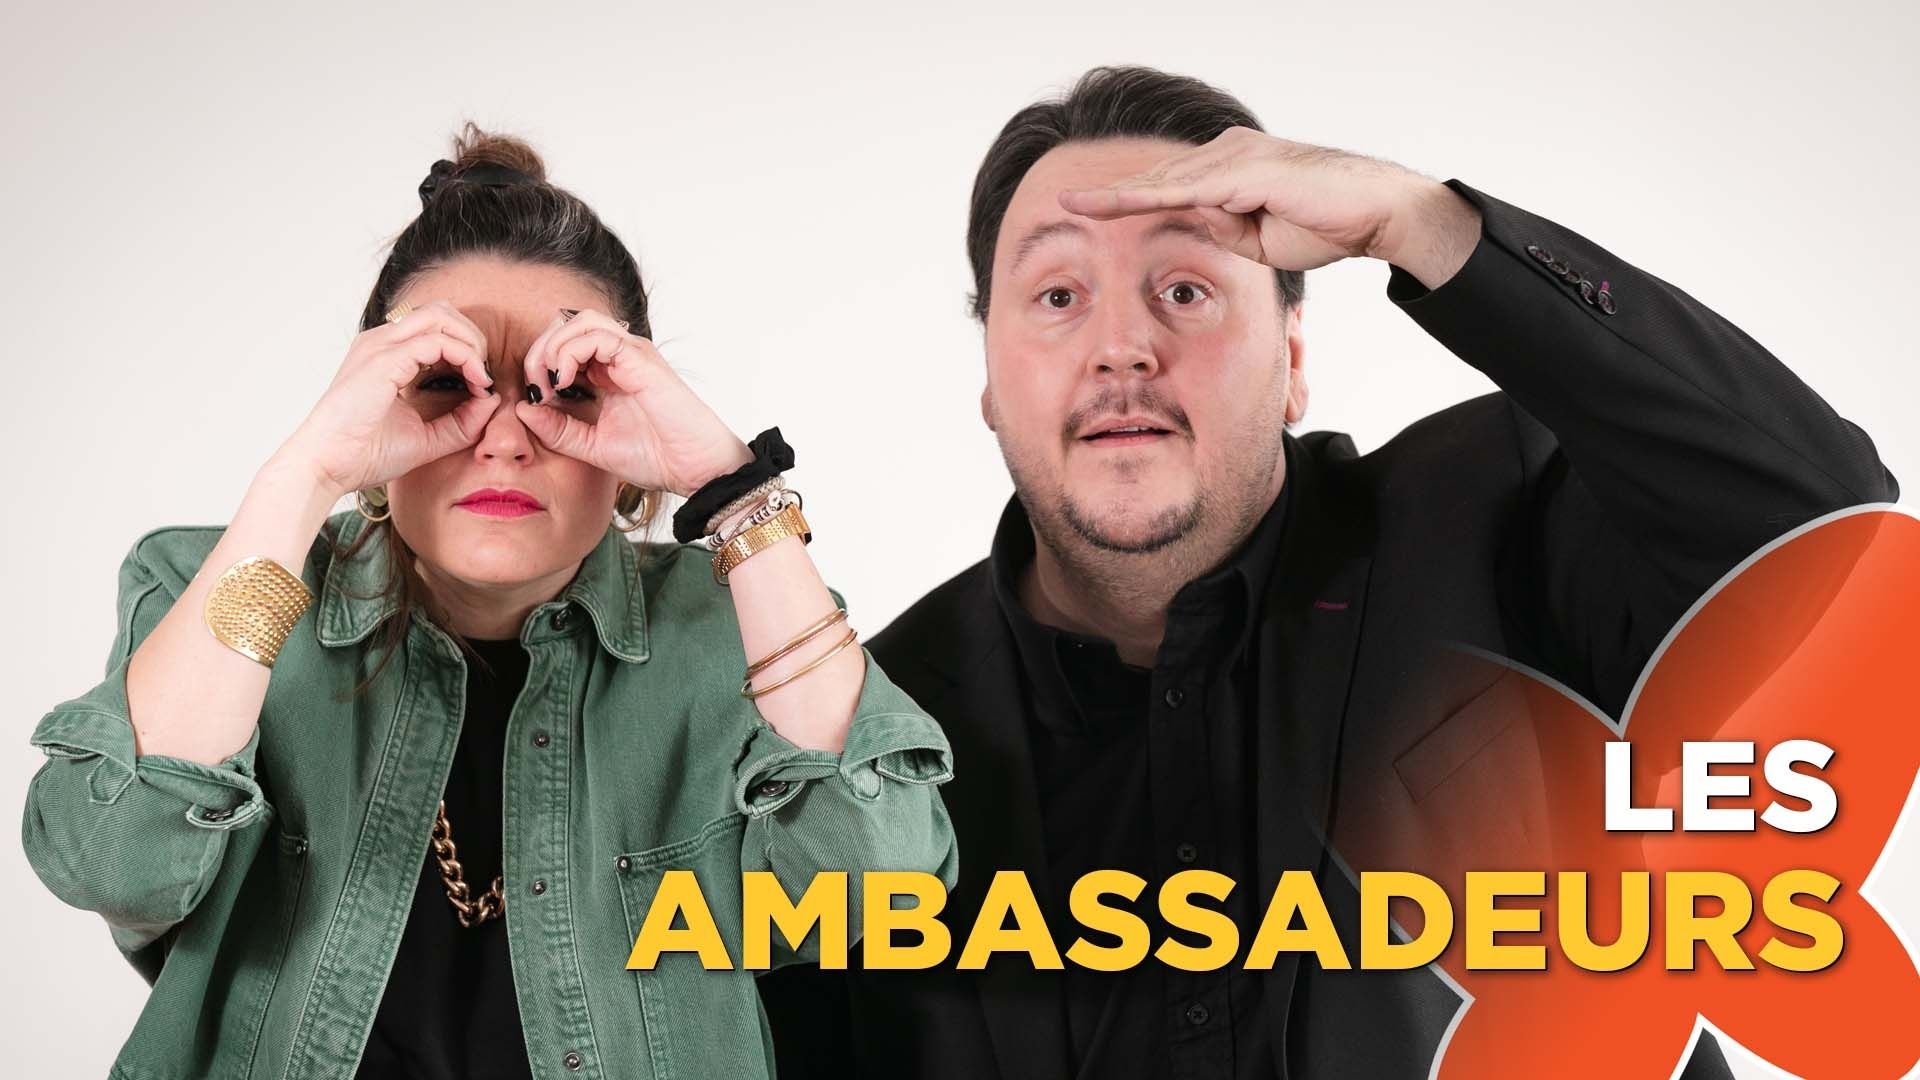 Les ambassadeurs